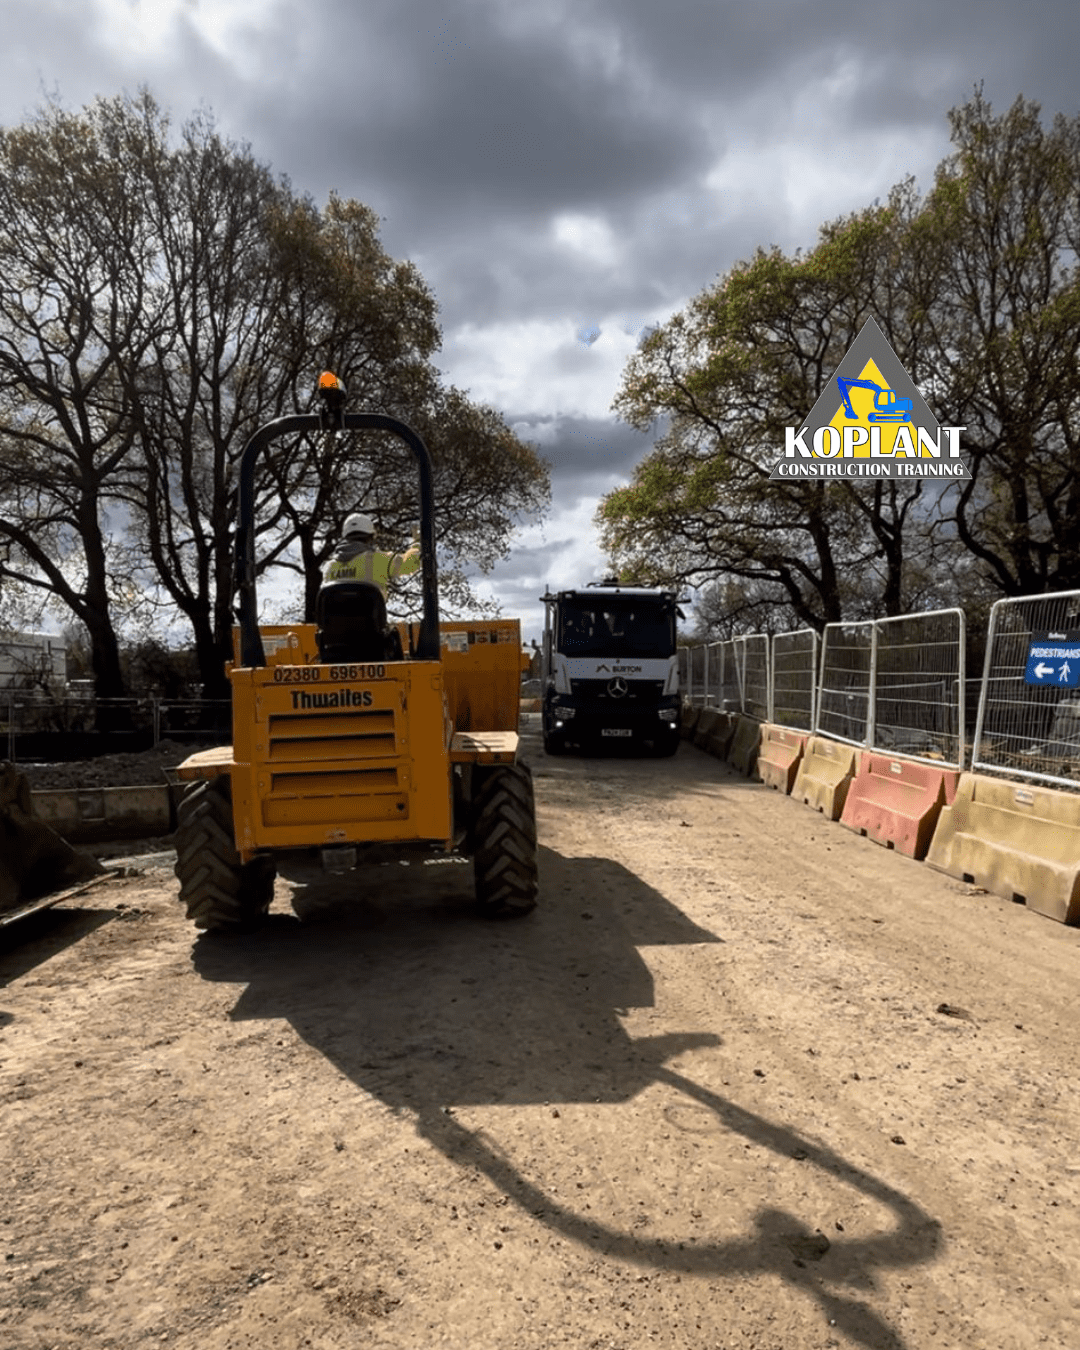 Construction Training in Southampton